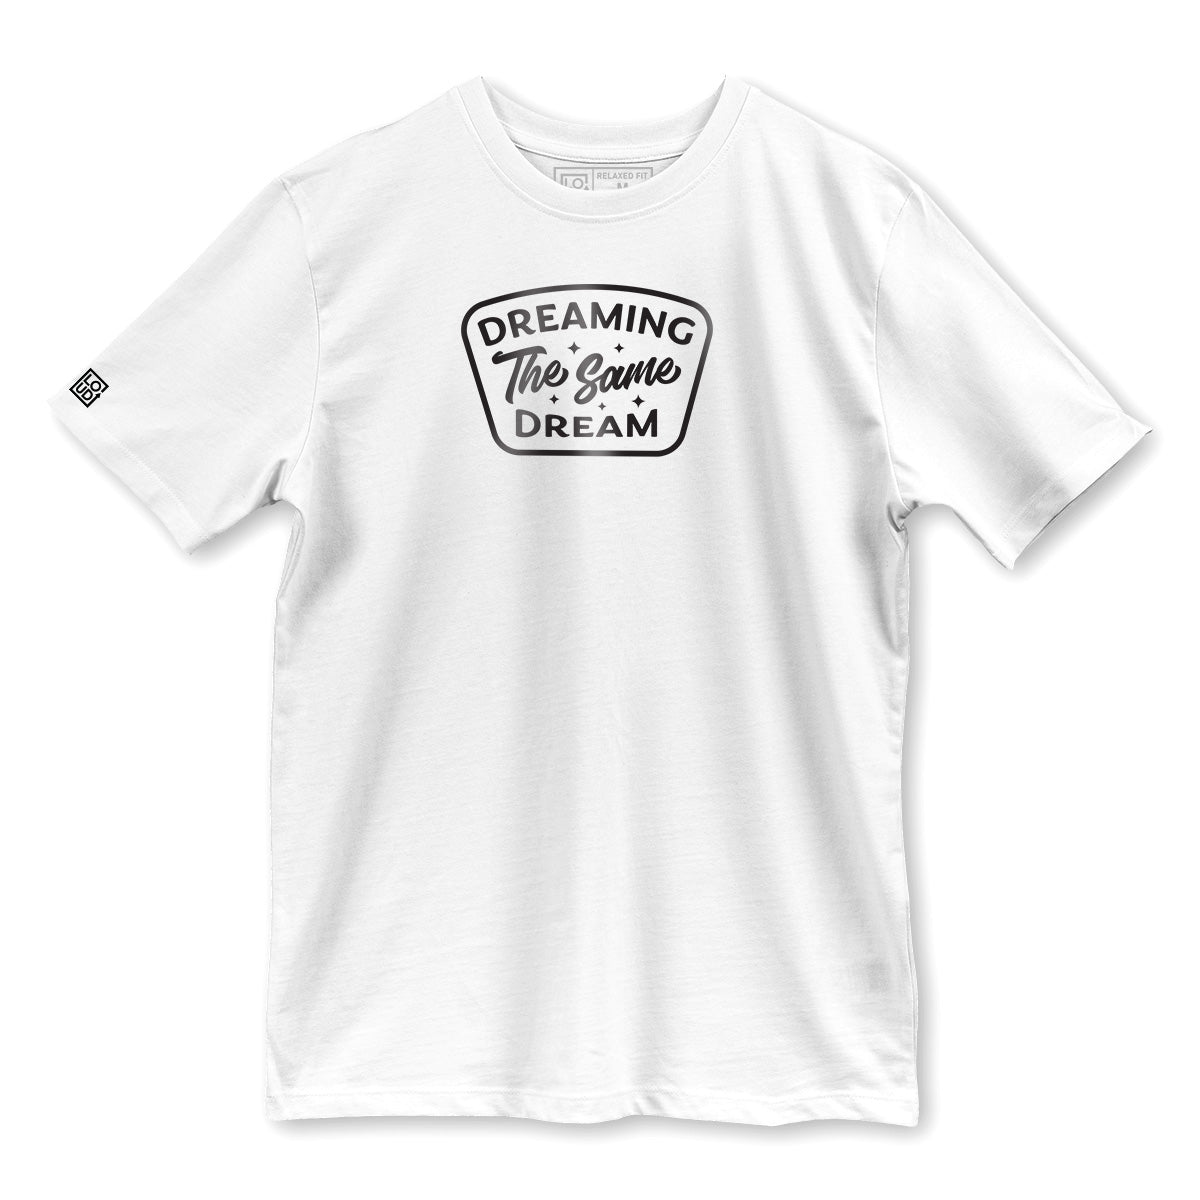 Unisex T-shirt "Dreaming The Same Dream"